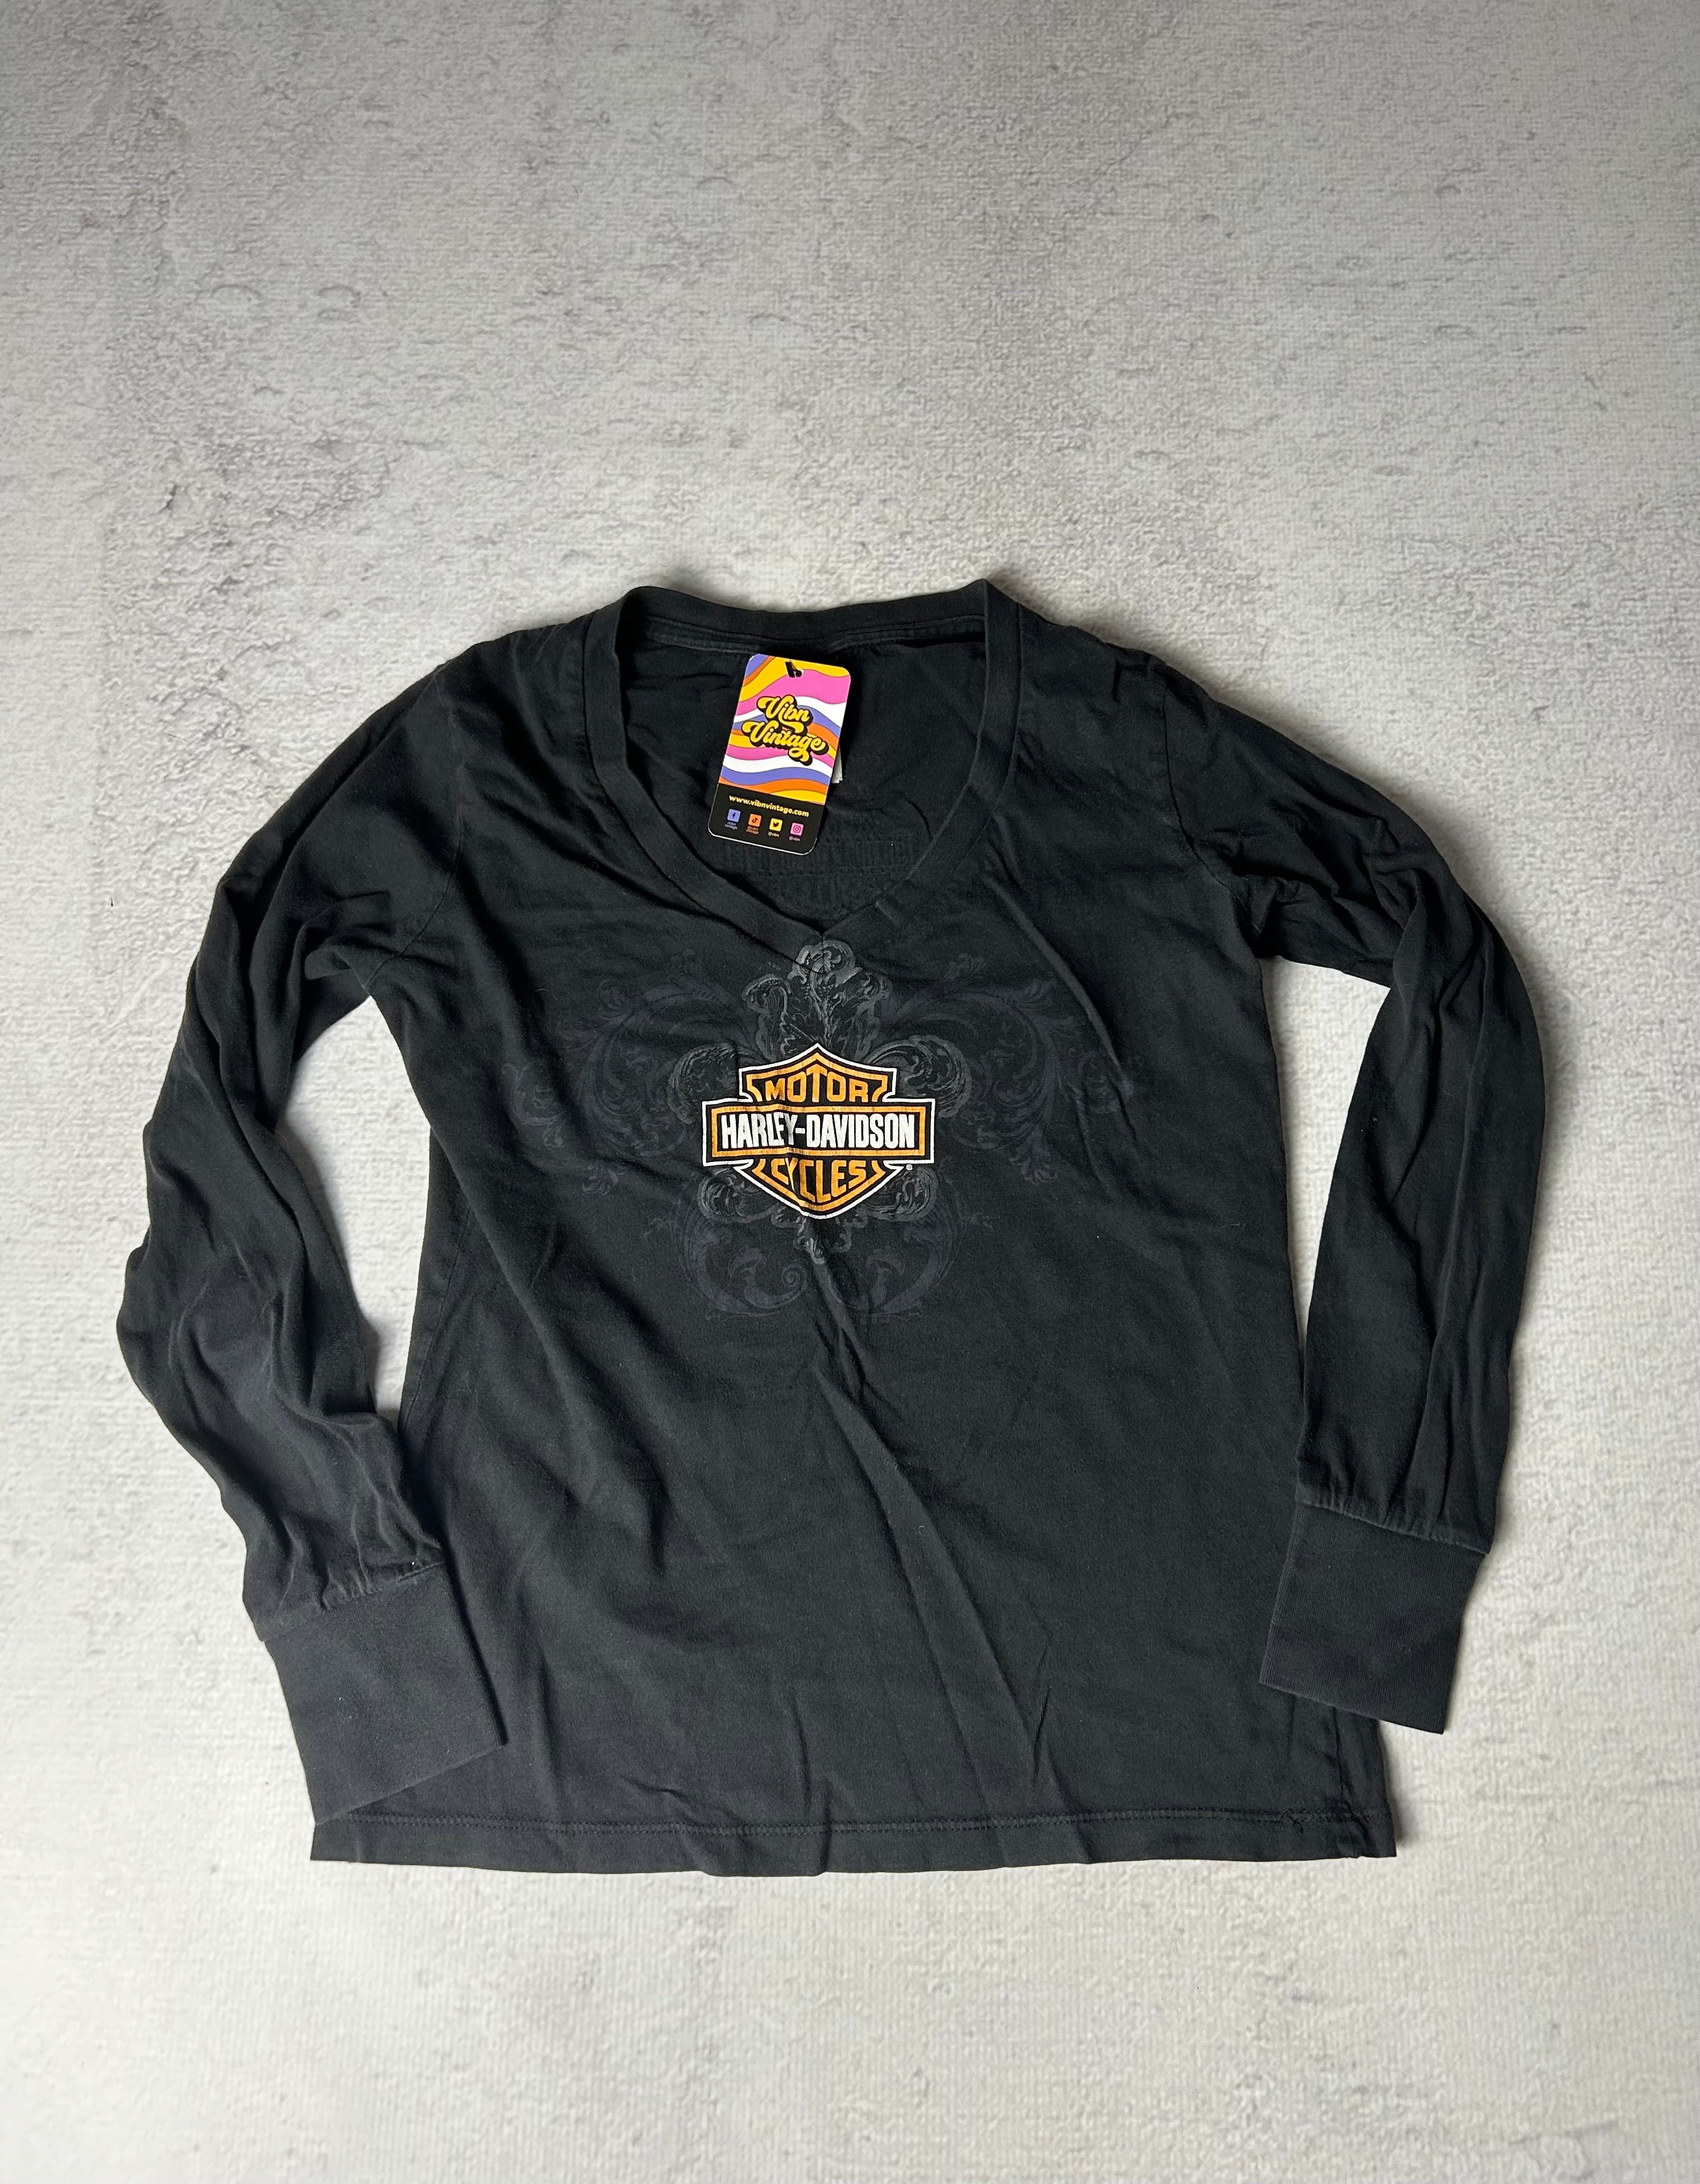 Vintage Harley Davidson Long-Sleeve T-Shirt - Women's Small